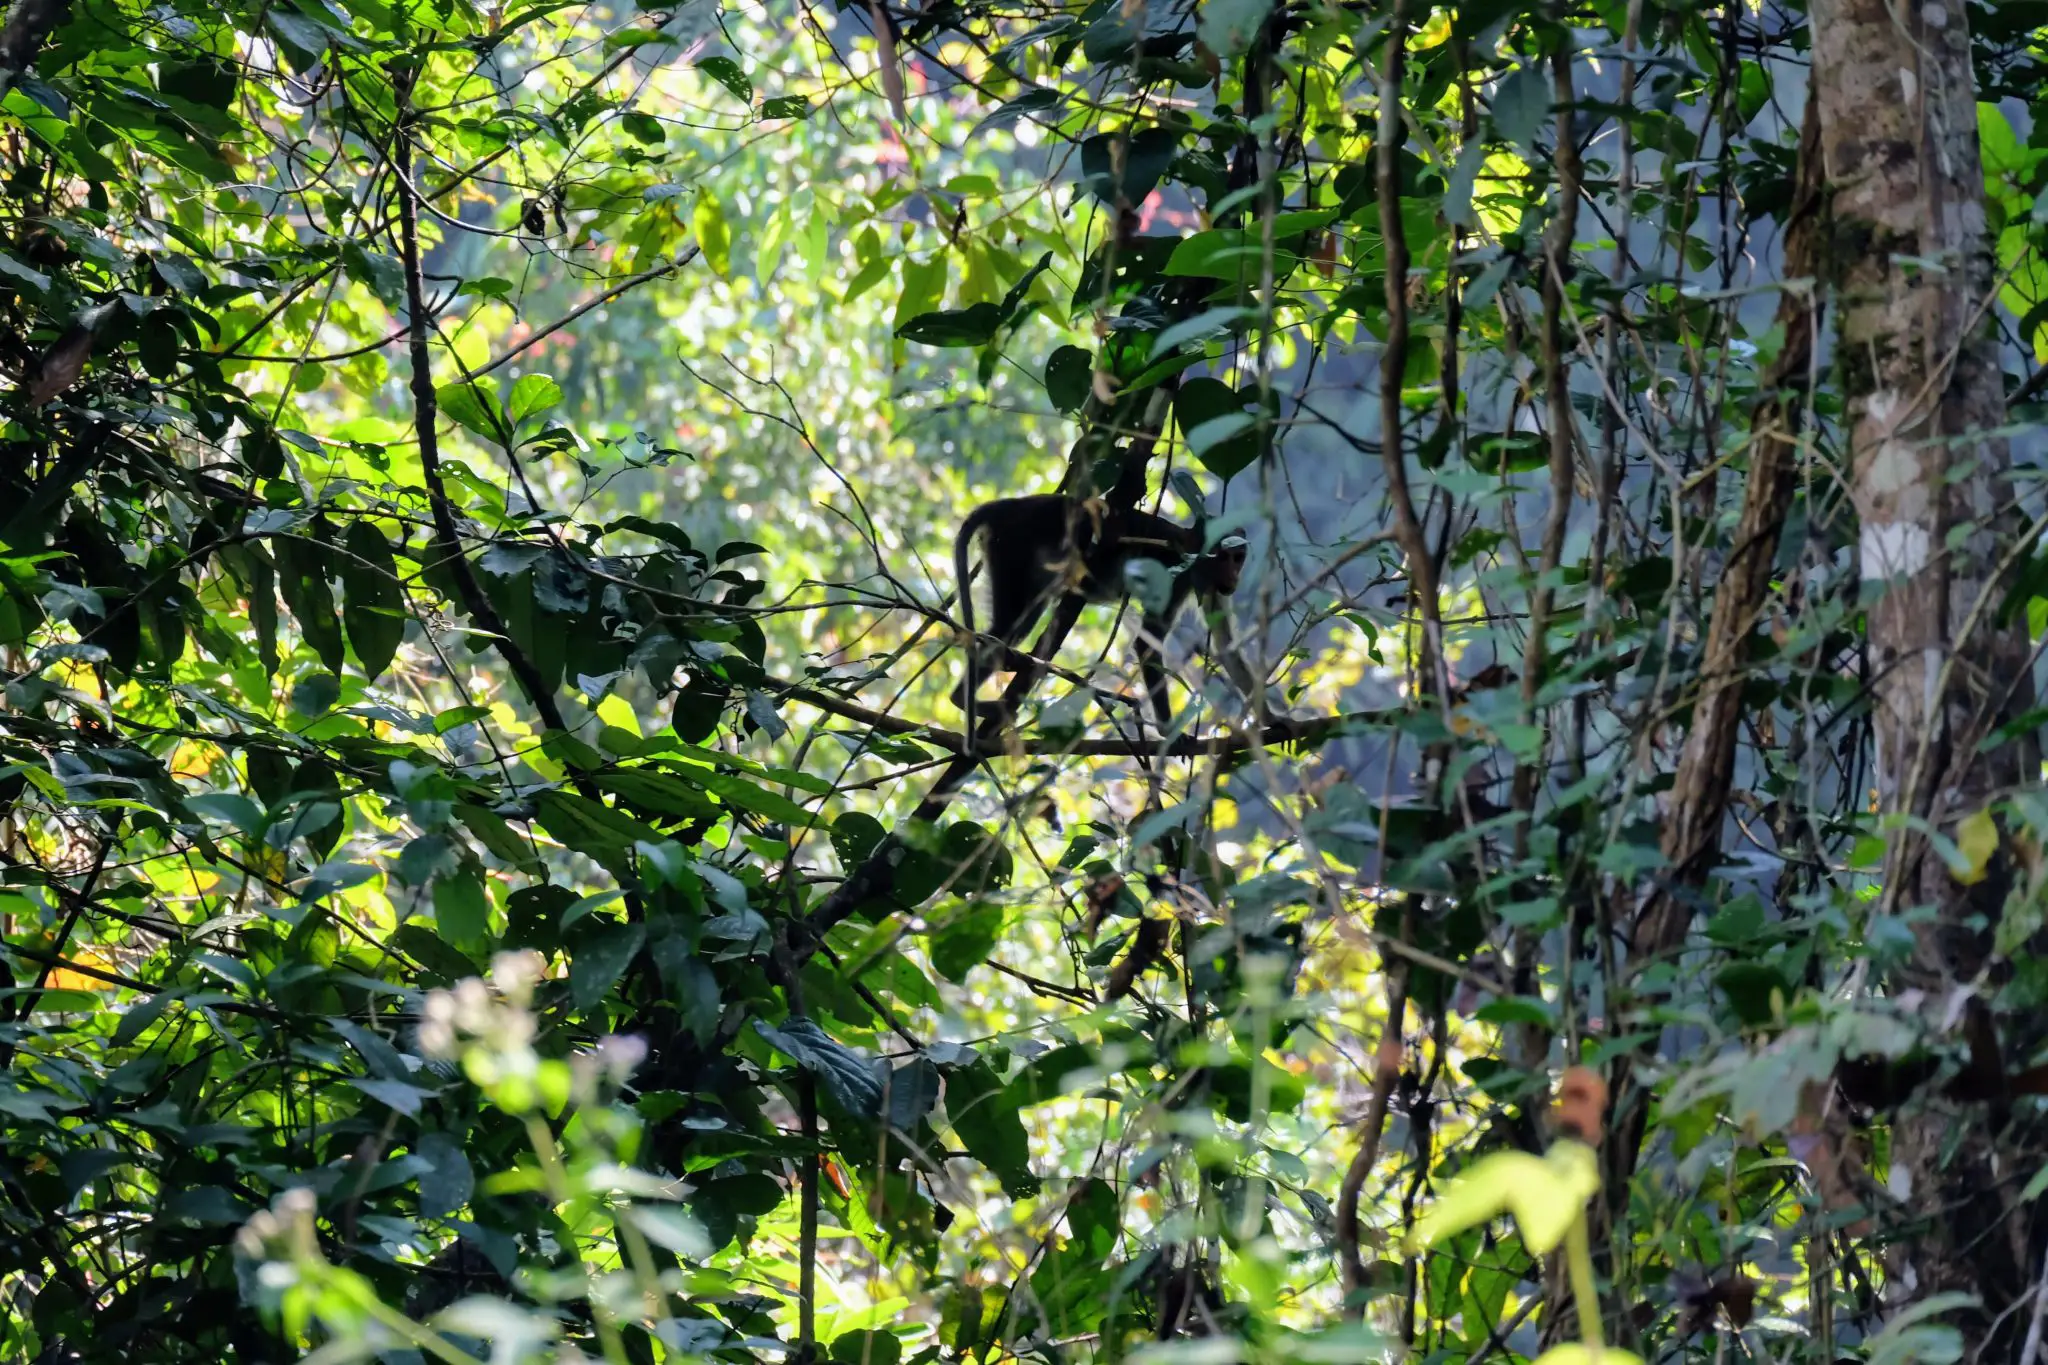 Bonnet macaque, Periyar National Park